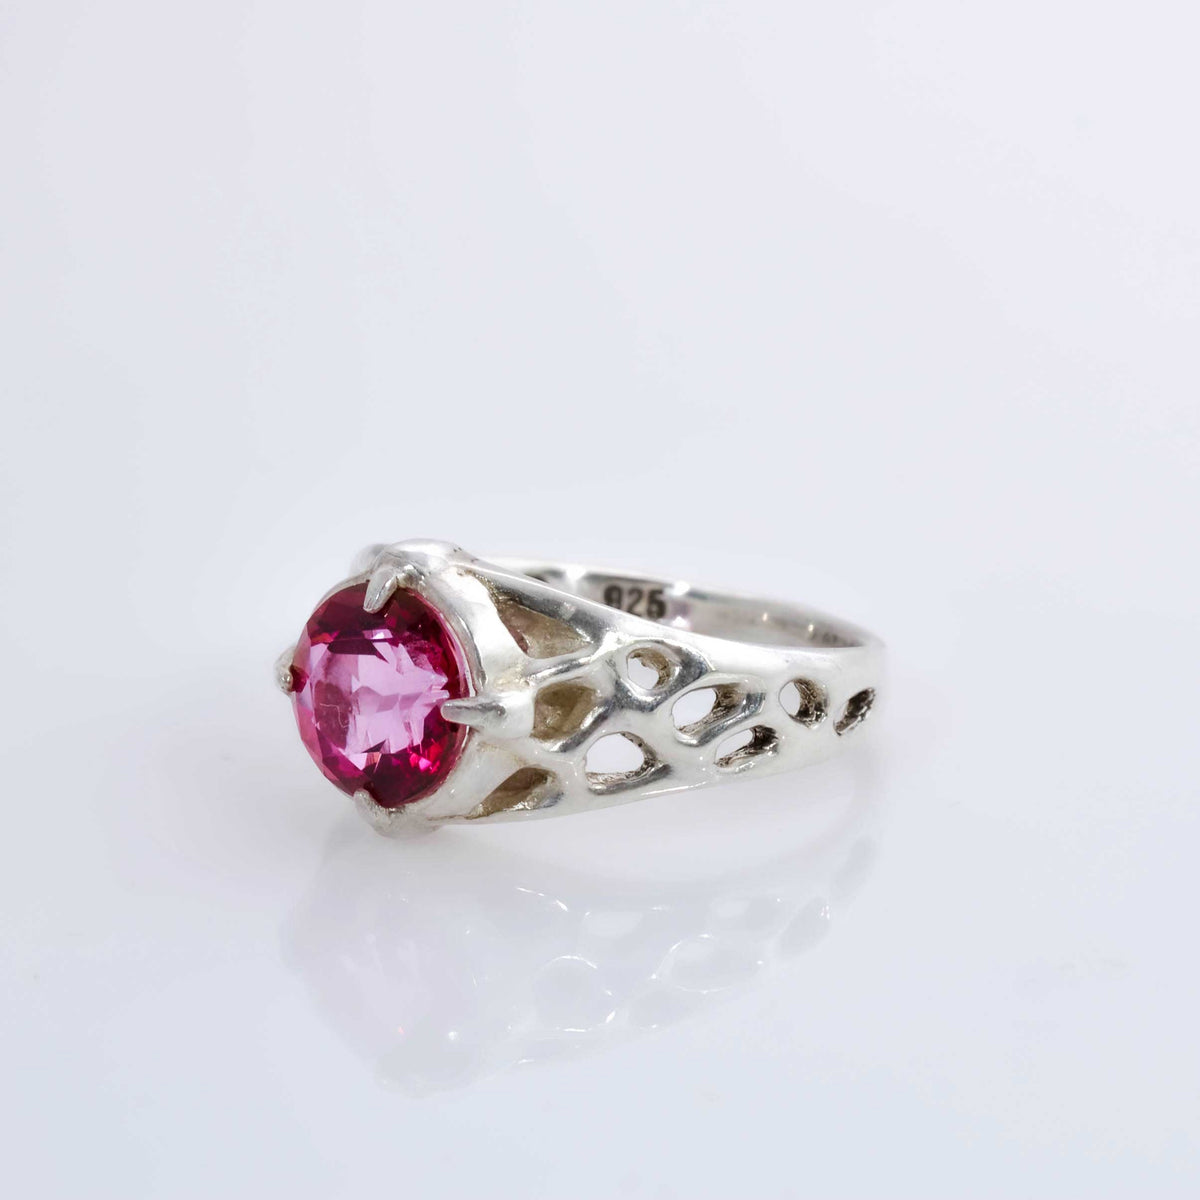 Make a Statement with an Art Nouveau Sculpture Ring Featuring a Round Pink Topaz